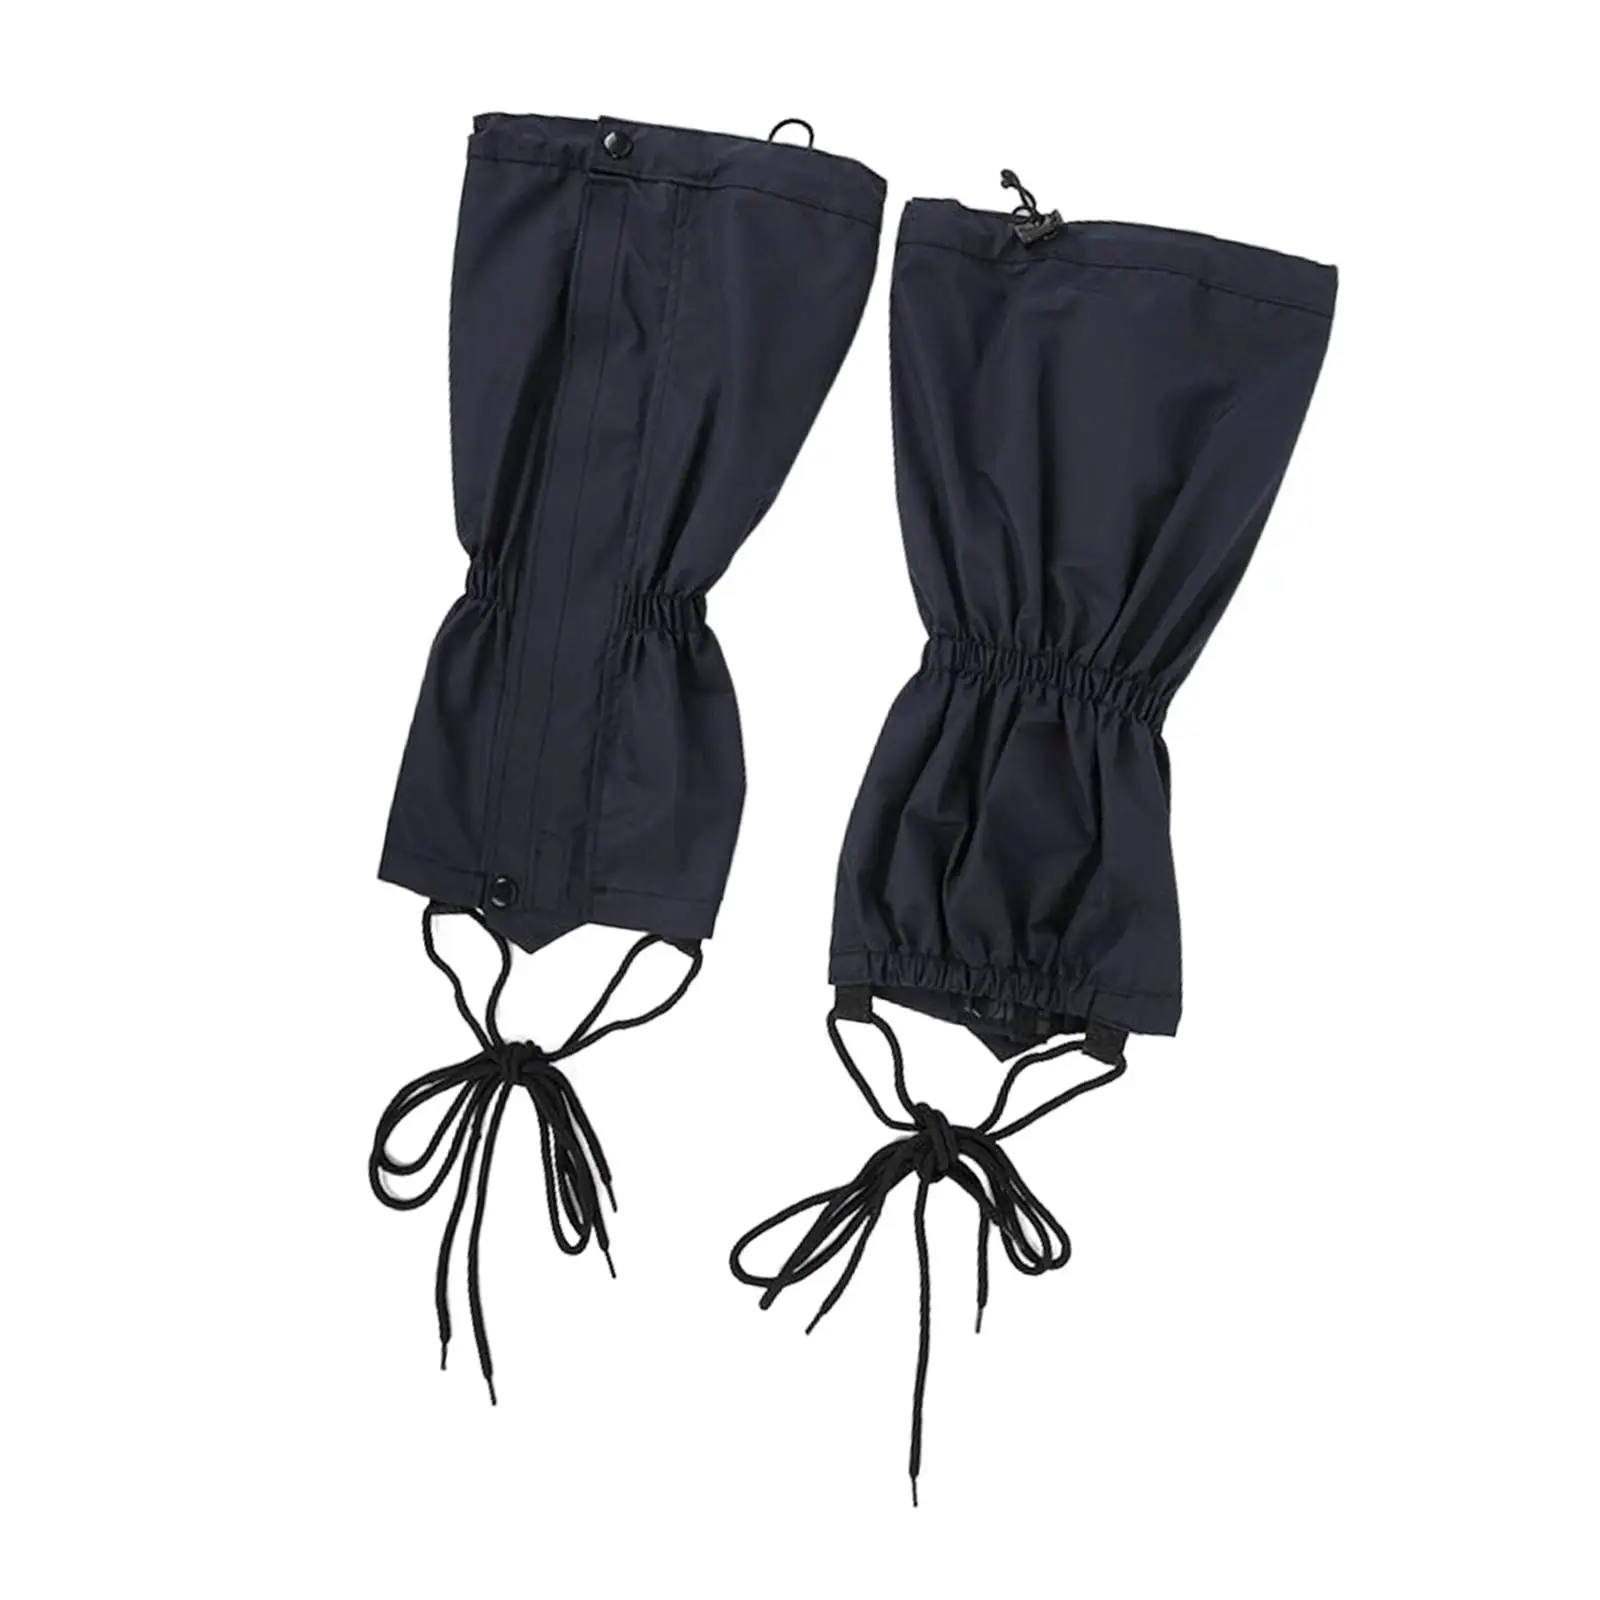 Durable Leg legging Anti Tear Protection for Outdoor Sports Trekking Skiing